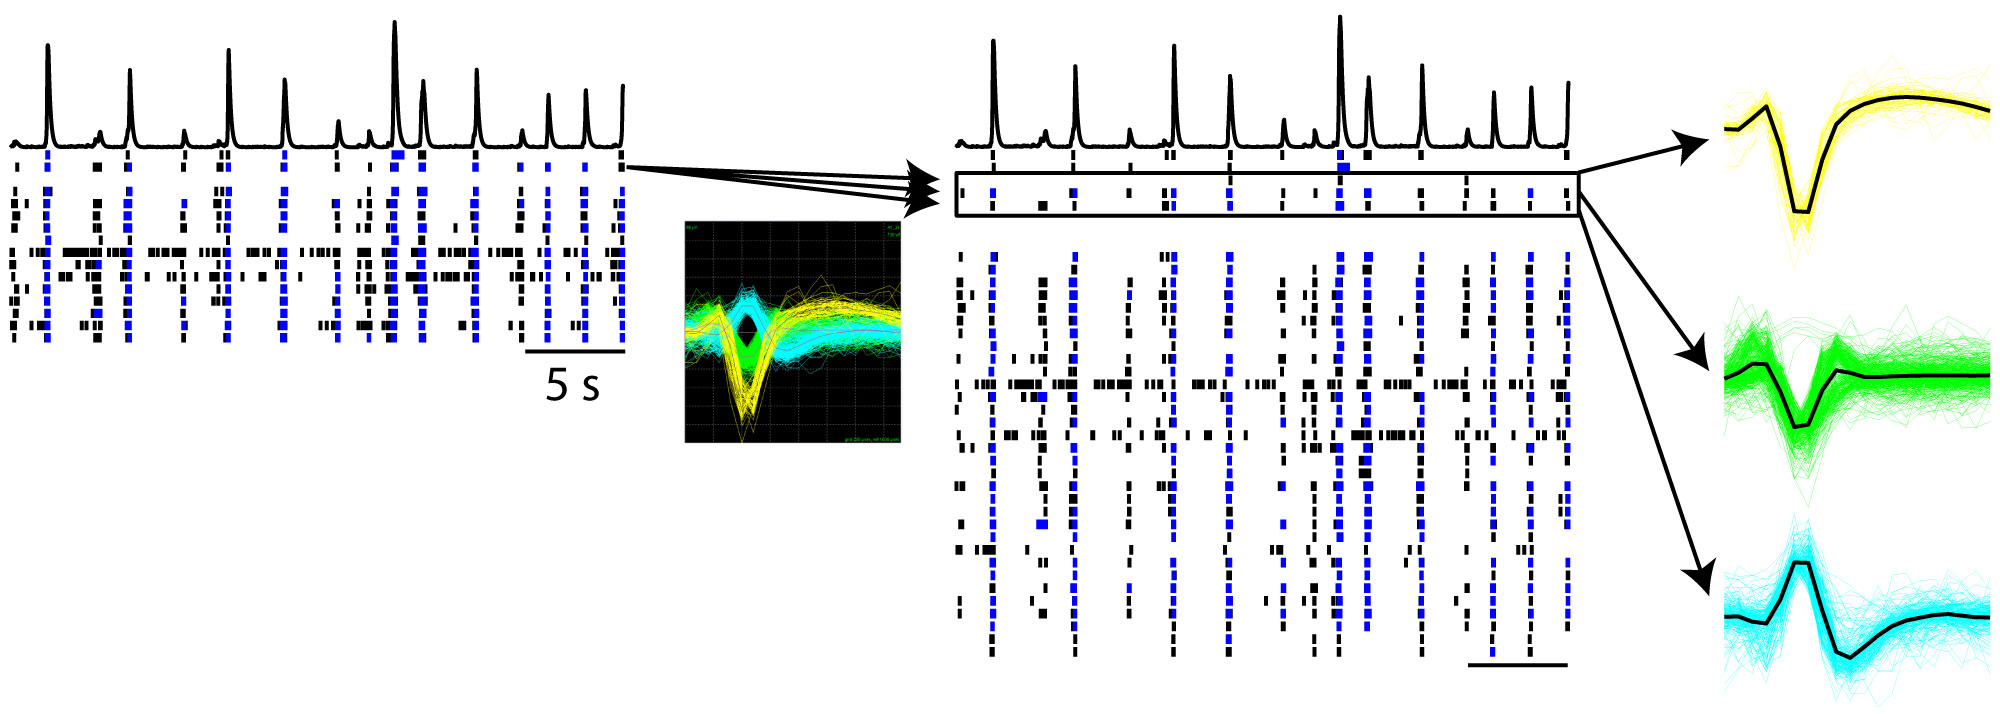 Neural spike sorting raster plot from multiwell multi-electrode array recordings